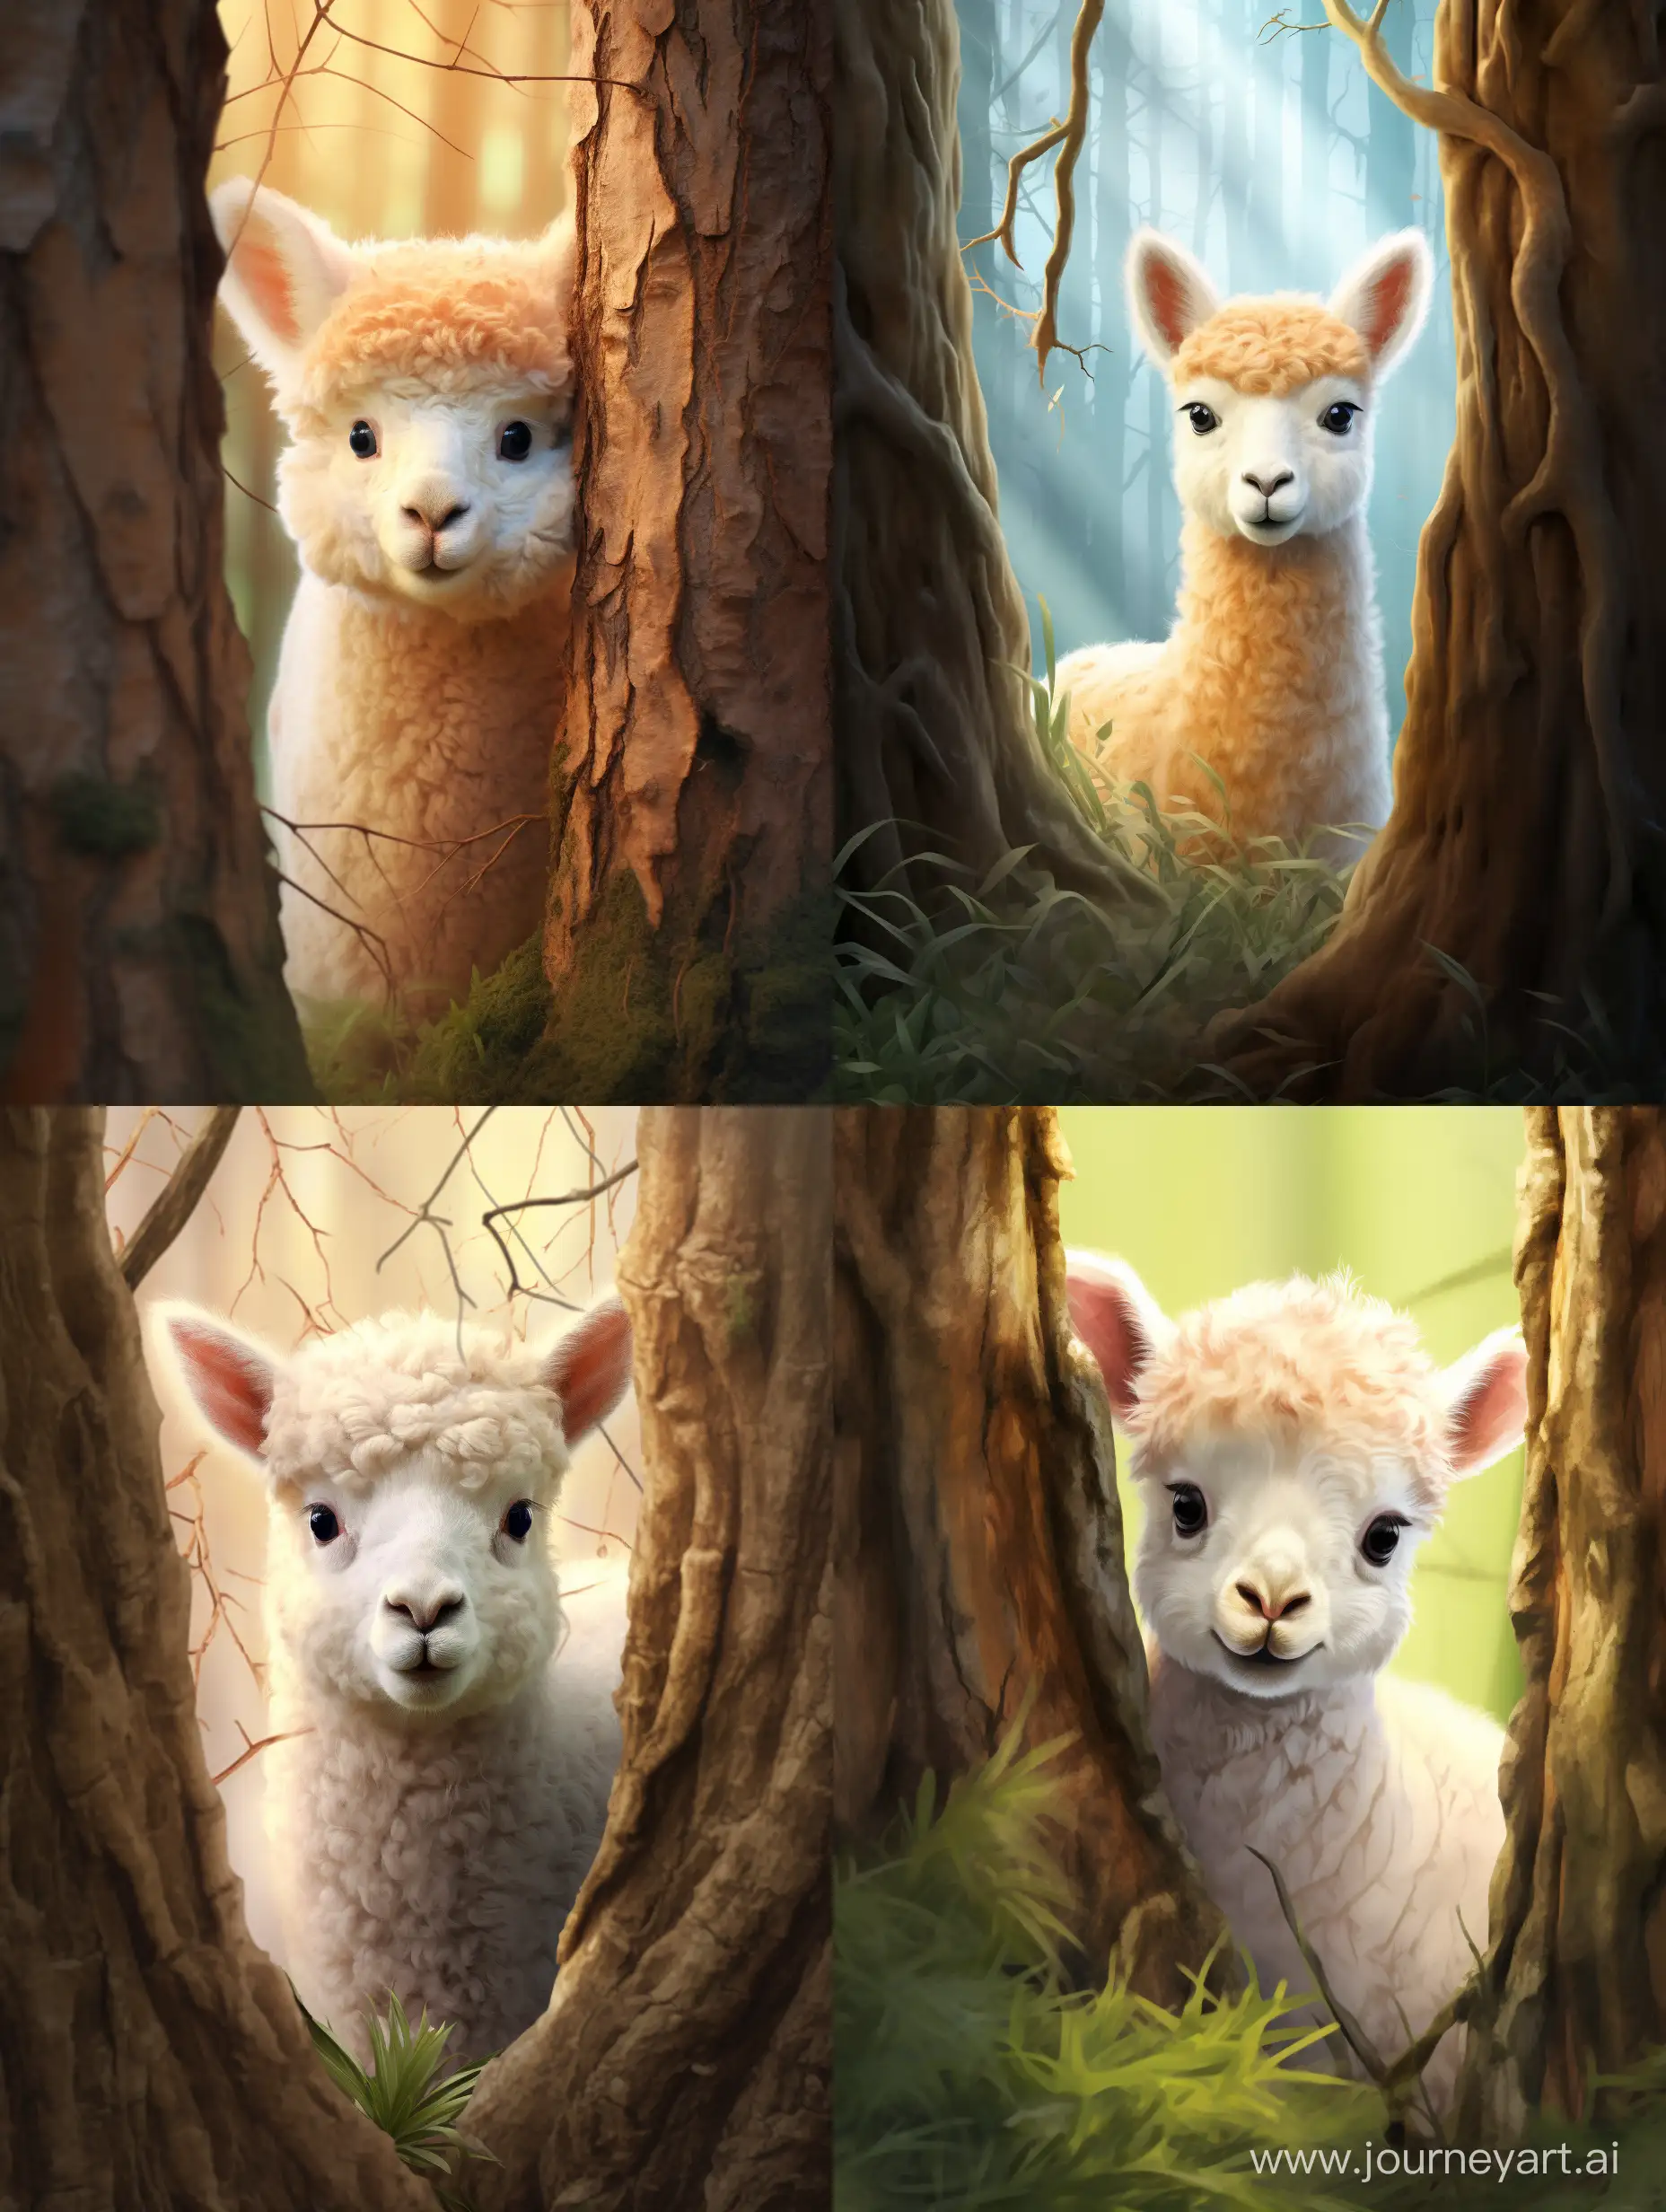 Enchanting-Forest-Encounter-Adorable-Baby-Alpaca-Peeking-from-Behind-a-Tree-in-Hyperrealistic-Fantasy-Scene